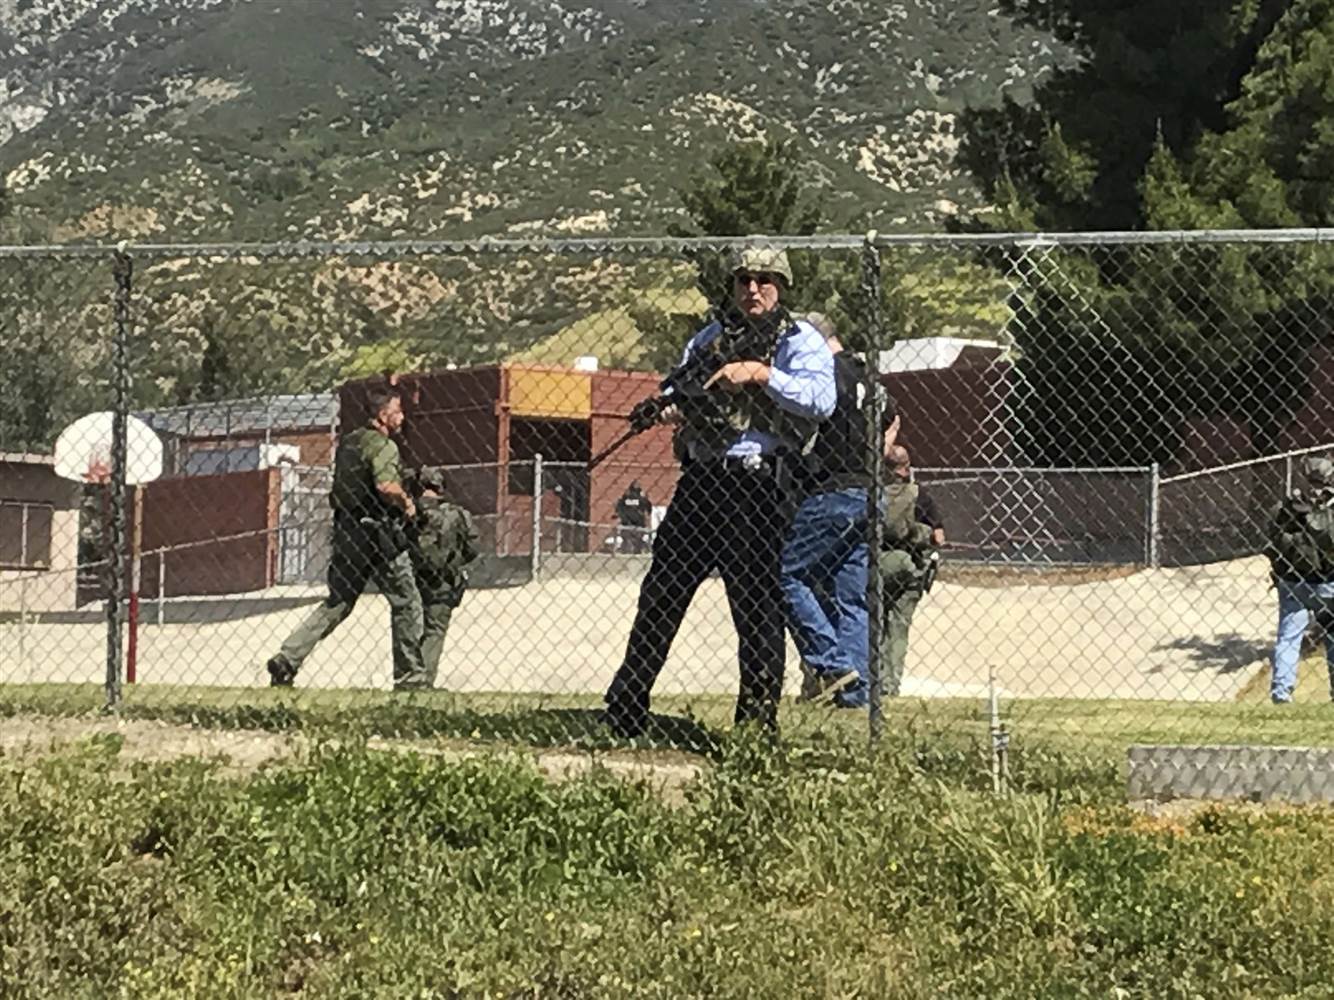 School Shooting In California Was A “Domestic Dispute”